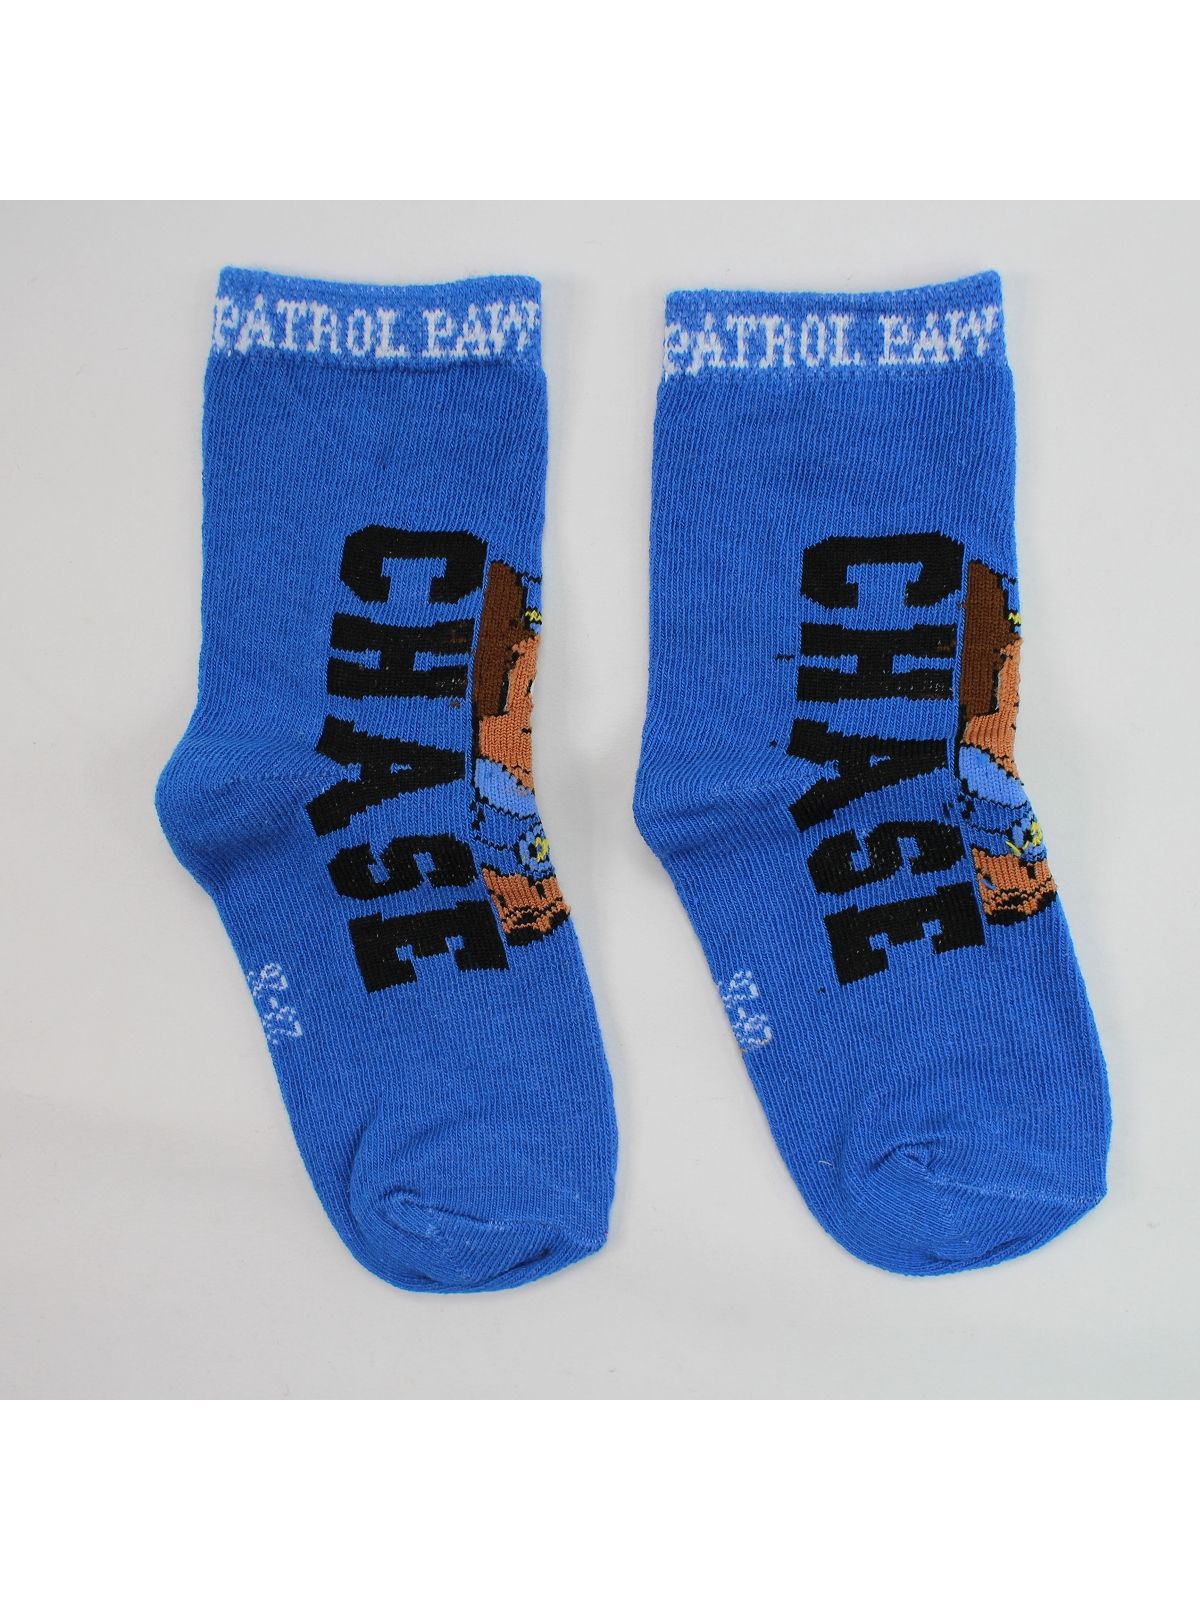 Paw Patrol Paar sokken